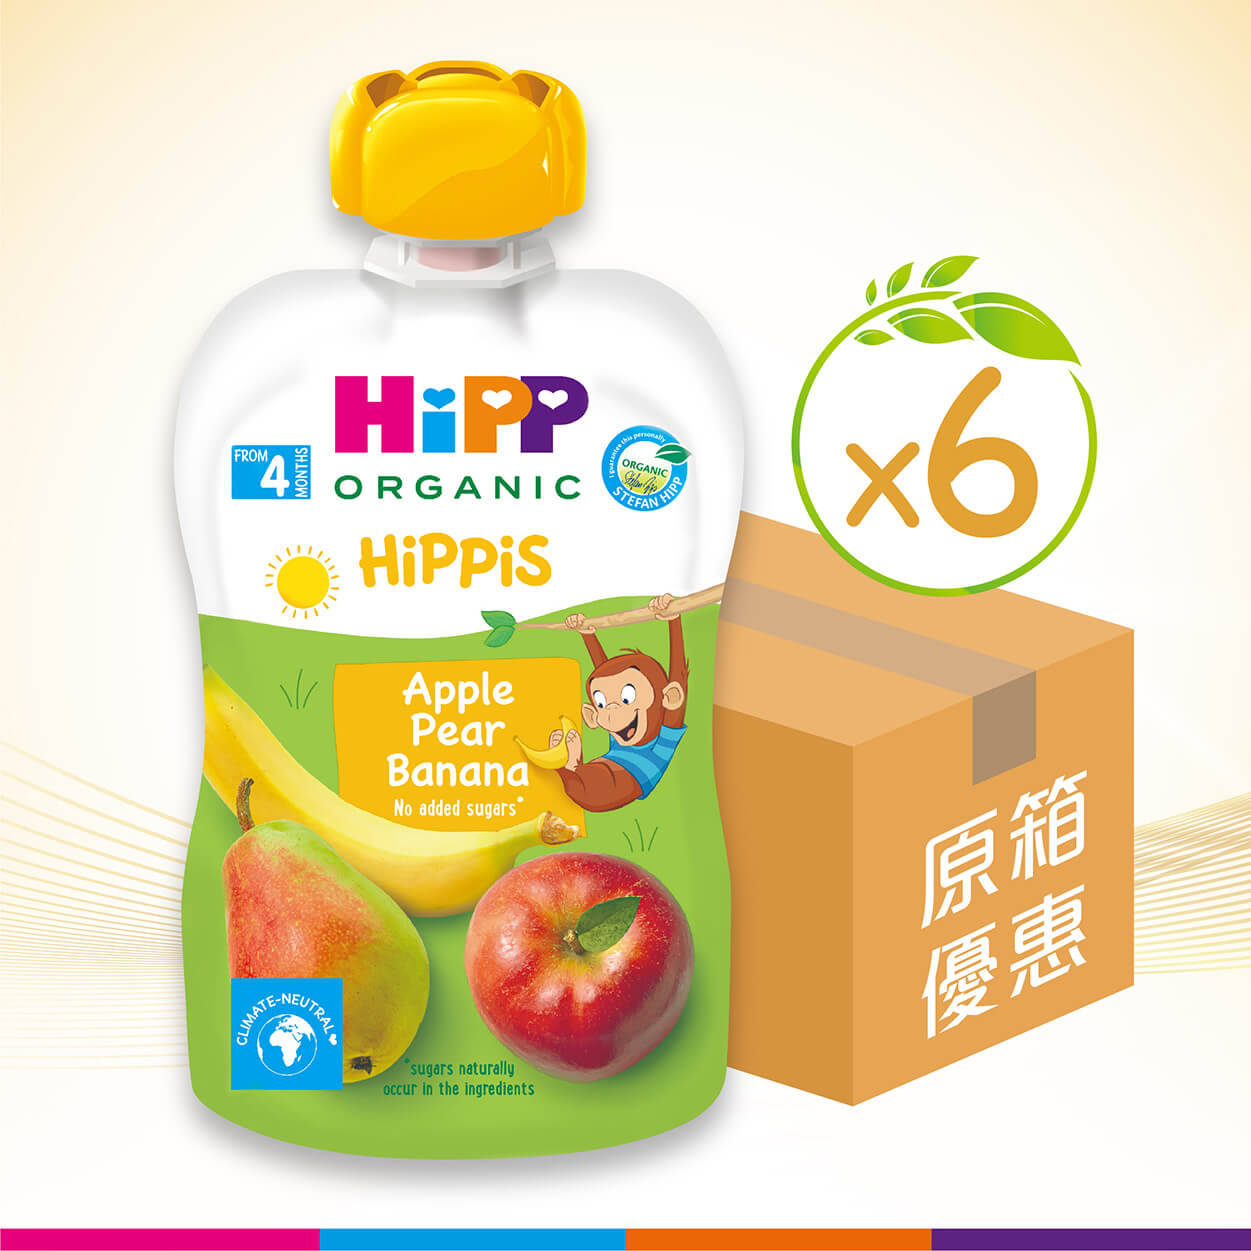 hipp-organic-apple-pear-banana-100g-6-pcs